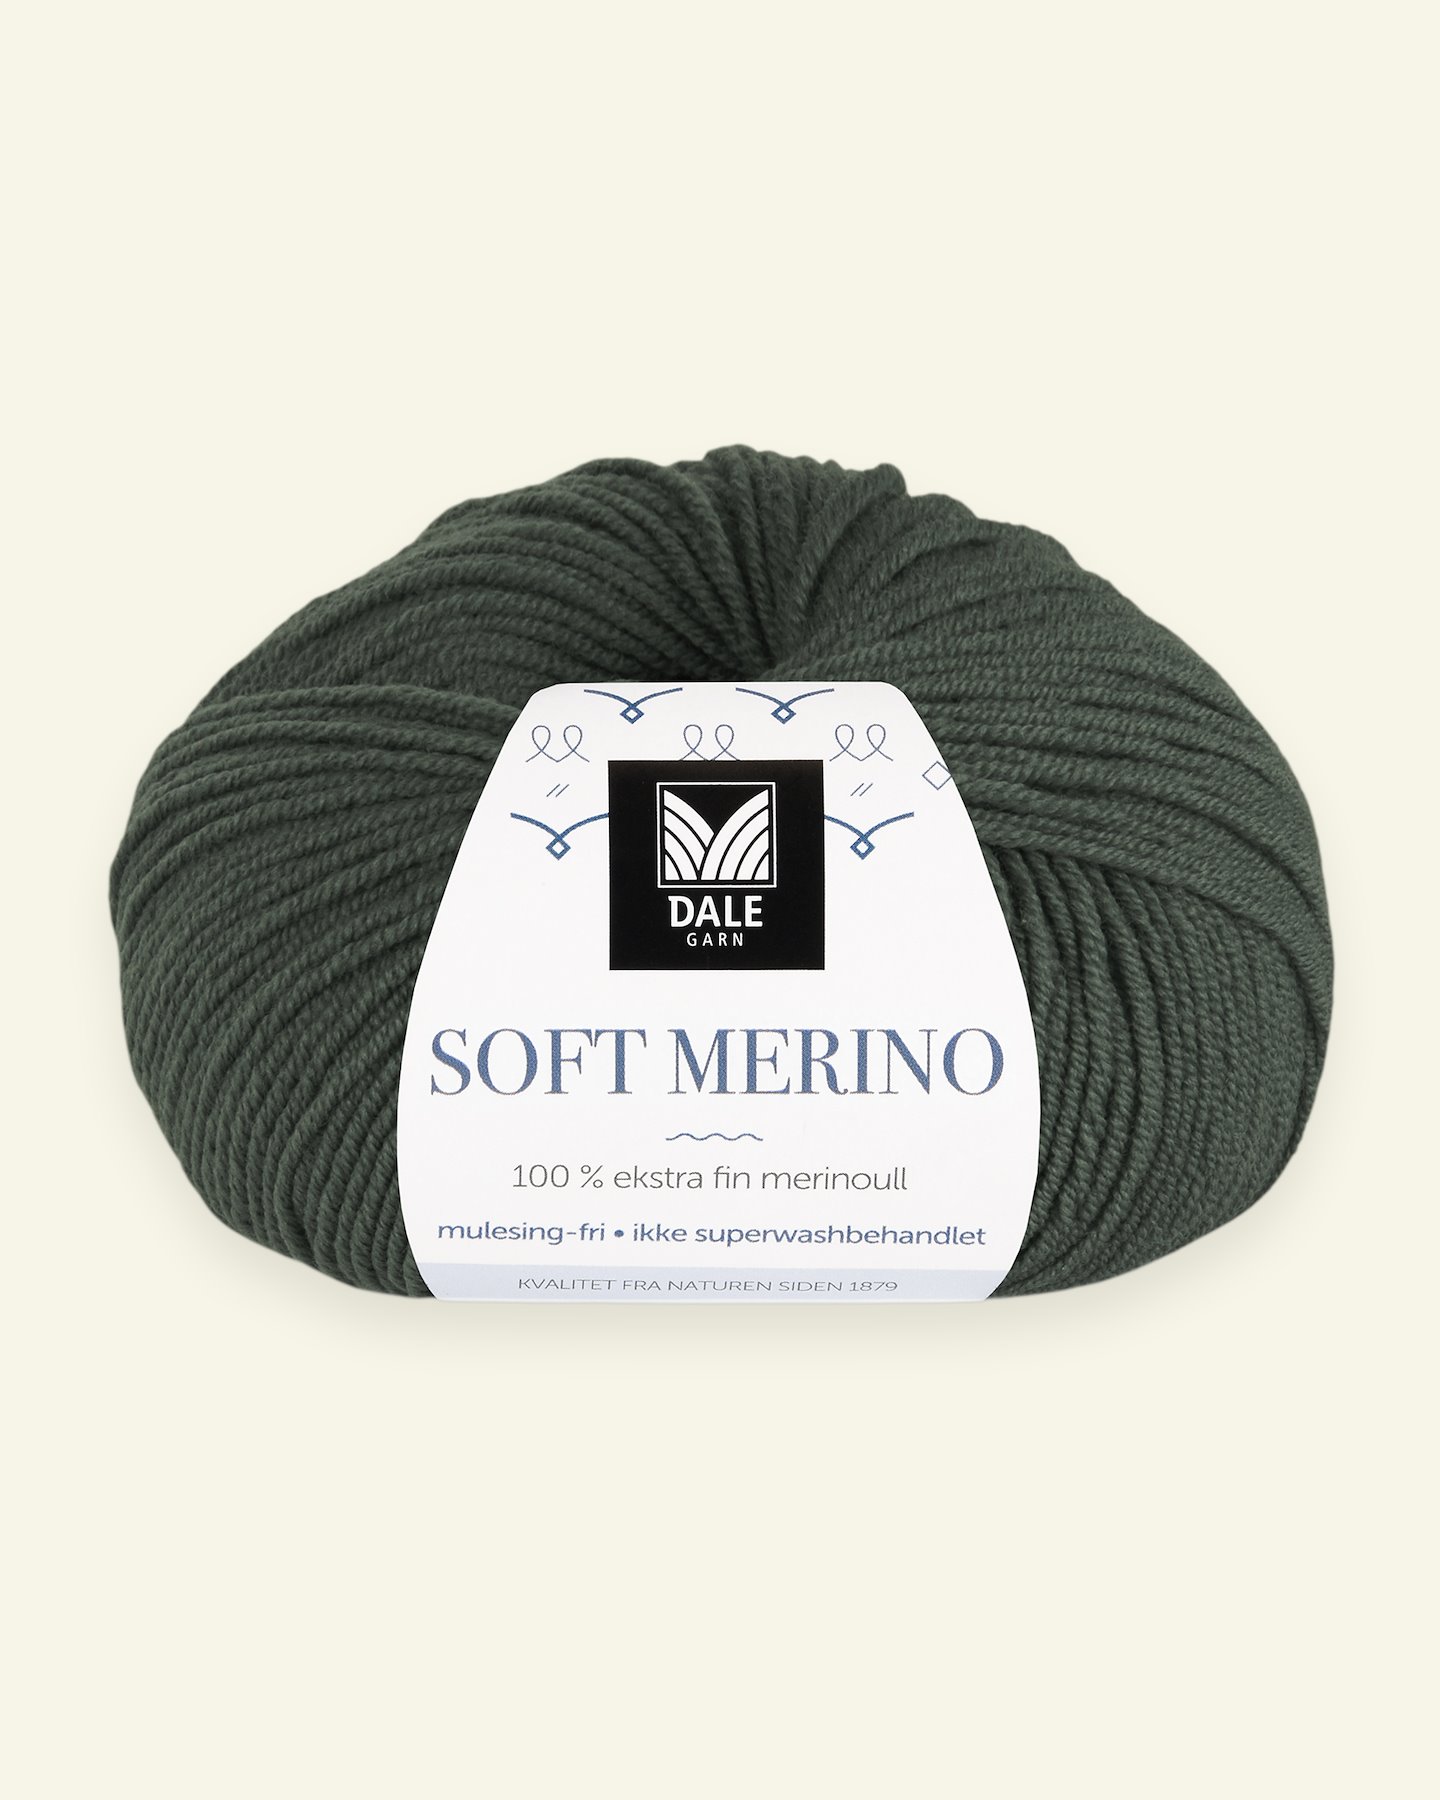 Dale Garn, 100% extra fine merino wool yarn, "Soft Merino", bottlegreen (3020) 90000341_pack